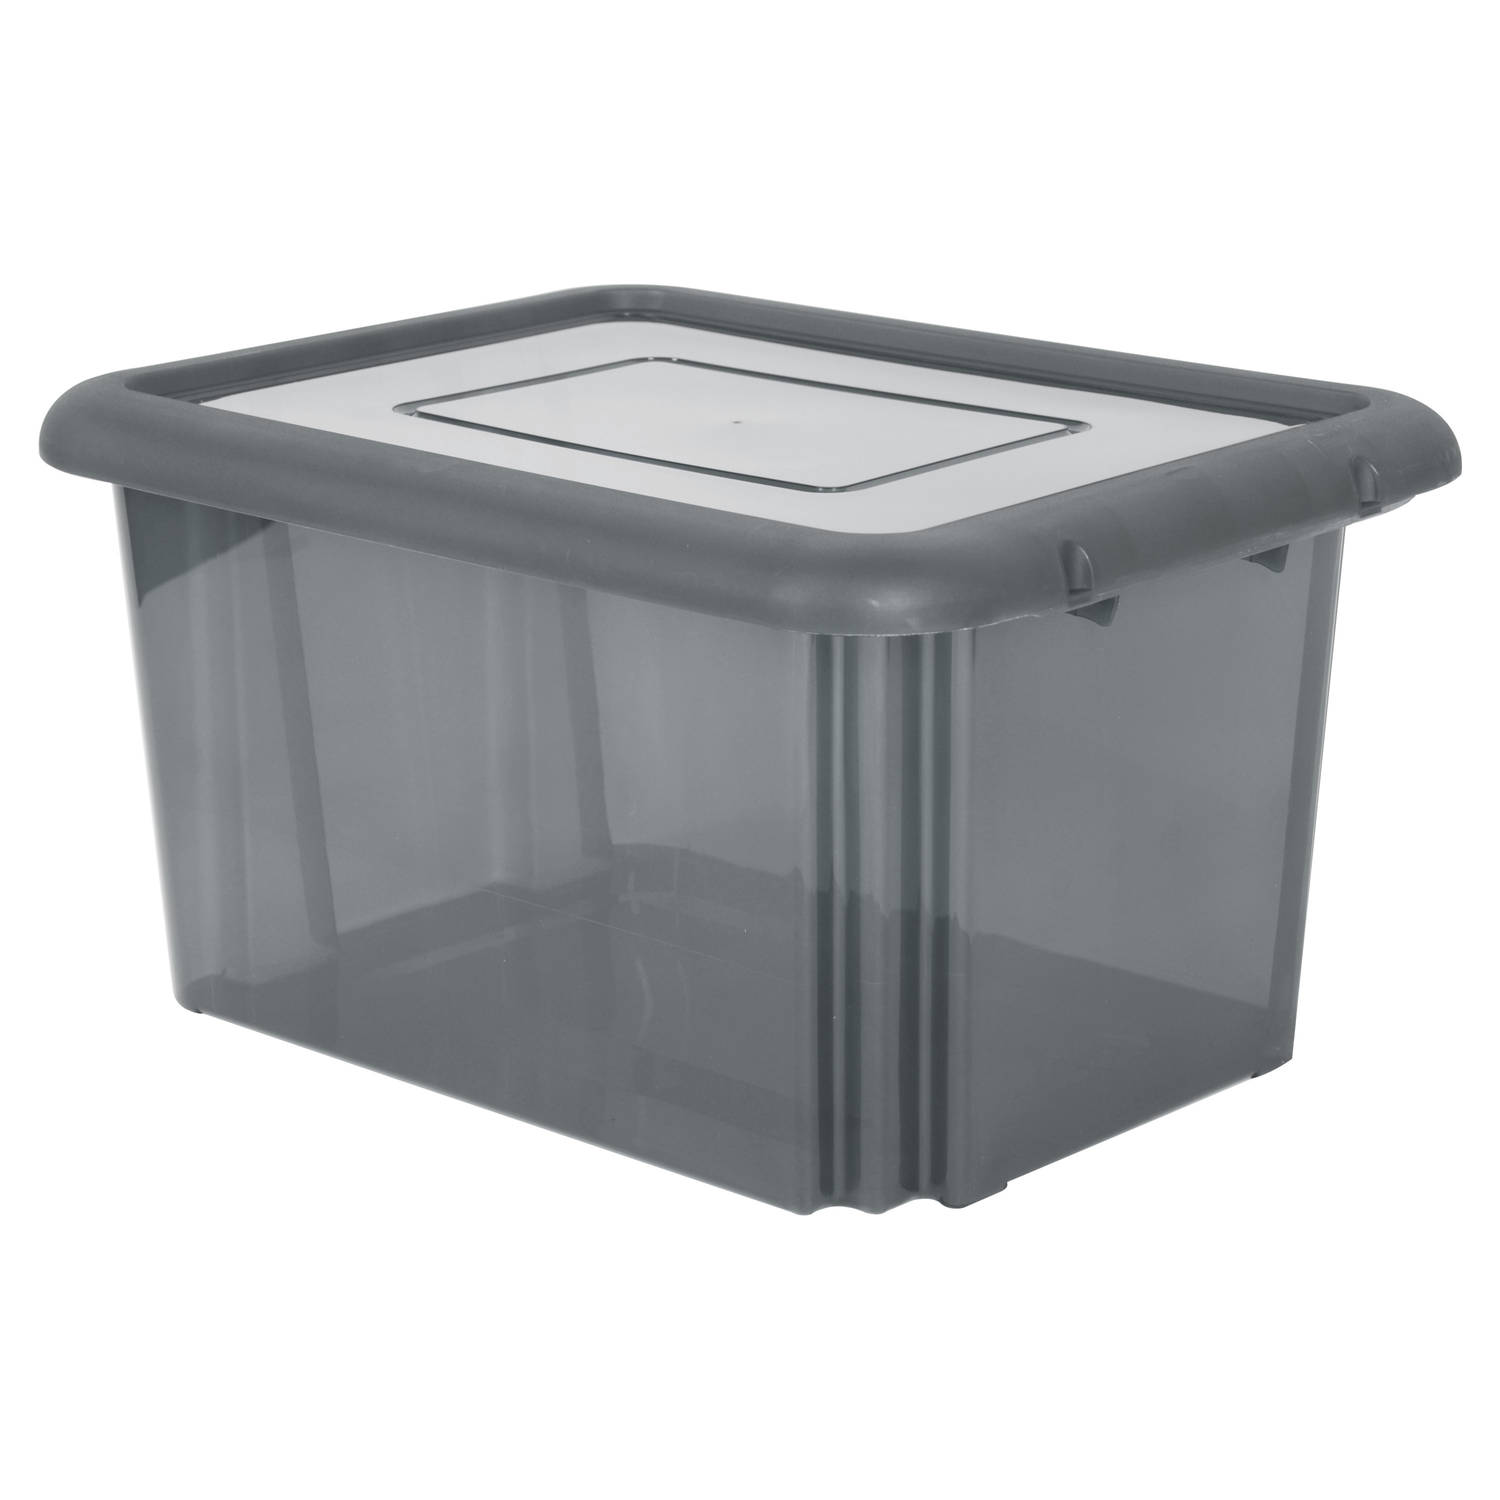 Kunststof opbergbox/opbergdoos grijs transparant L58 x B44 x H31 cm stapelbaar - Opbergbox